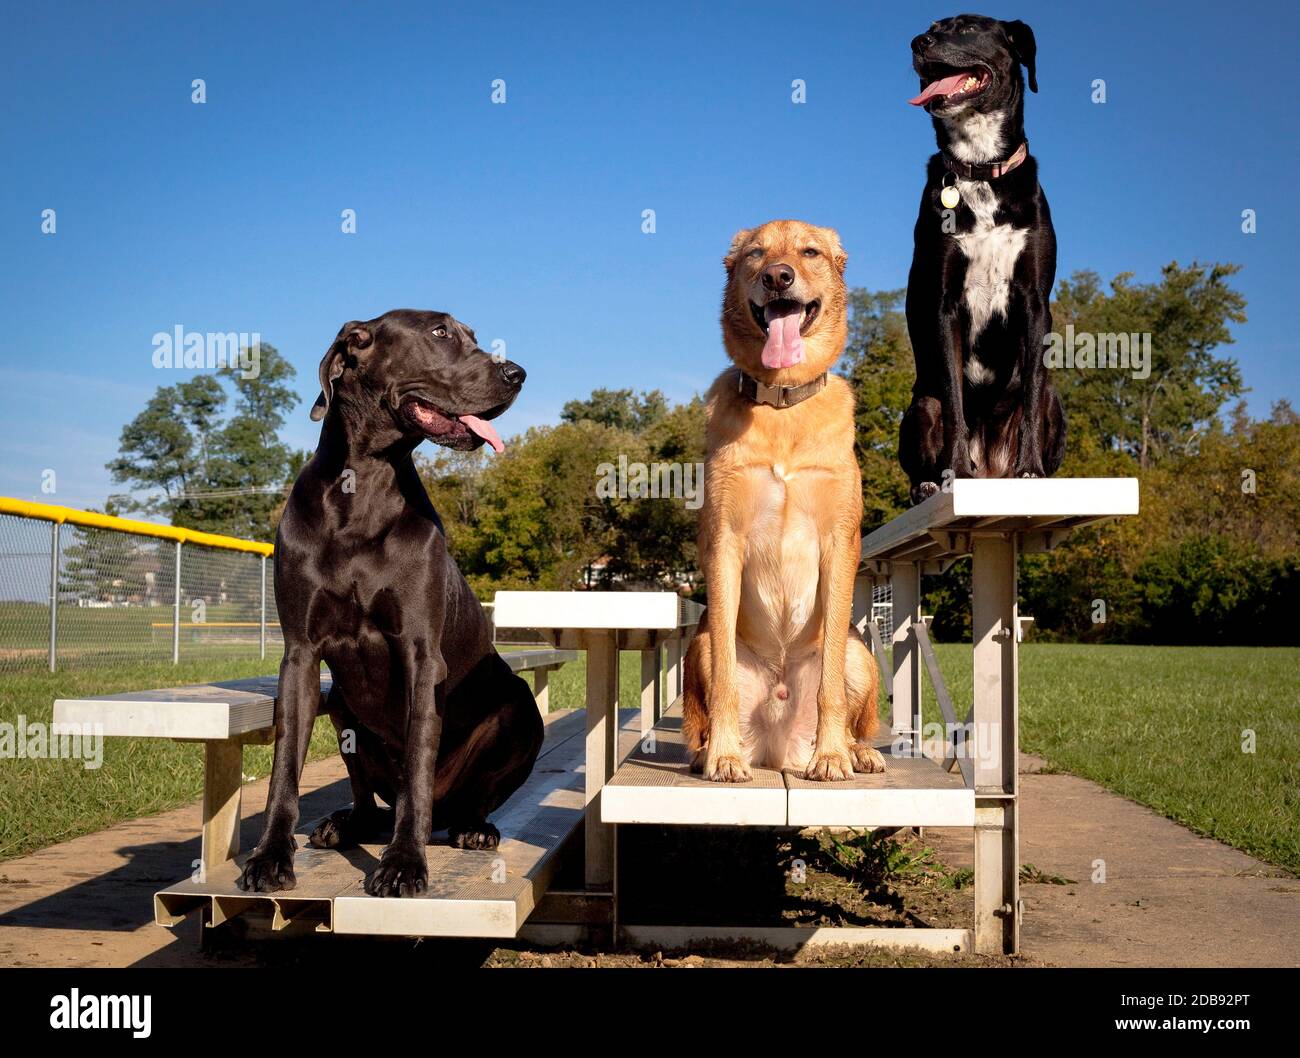 Three cute dogs sitting on a baseball bleacher Stock Photo